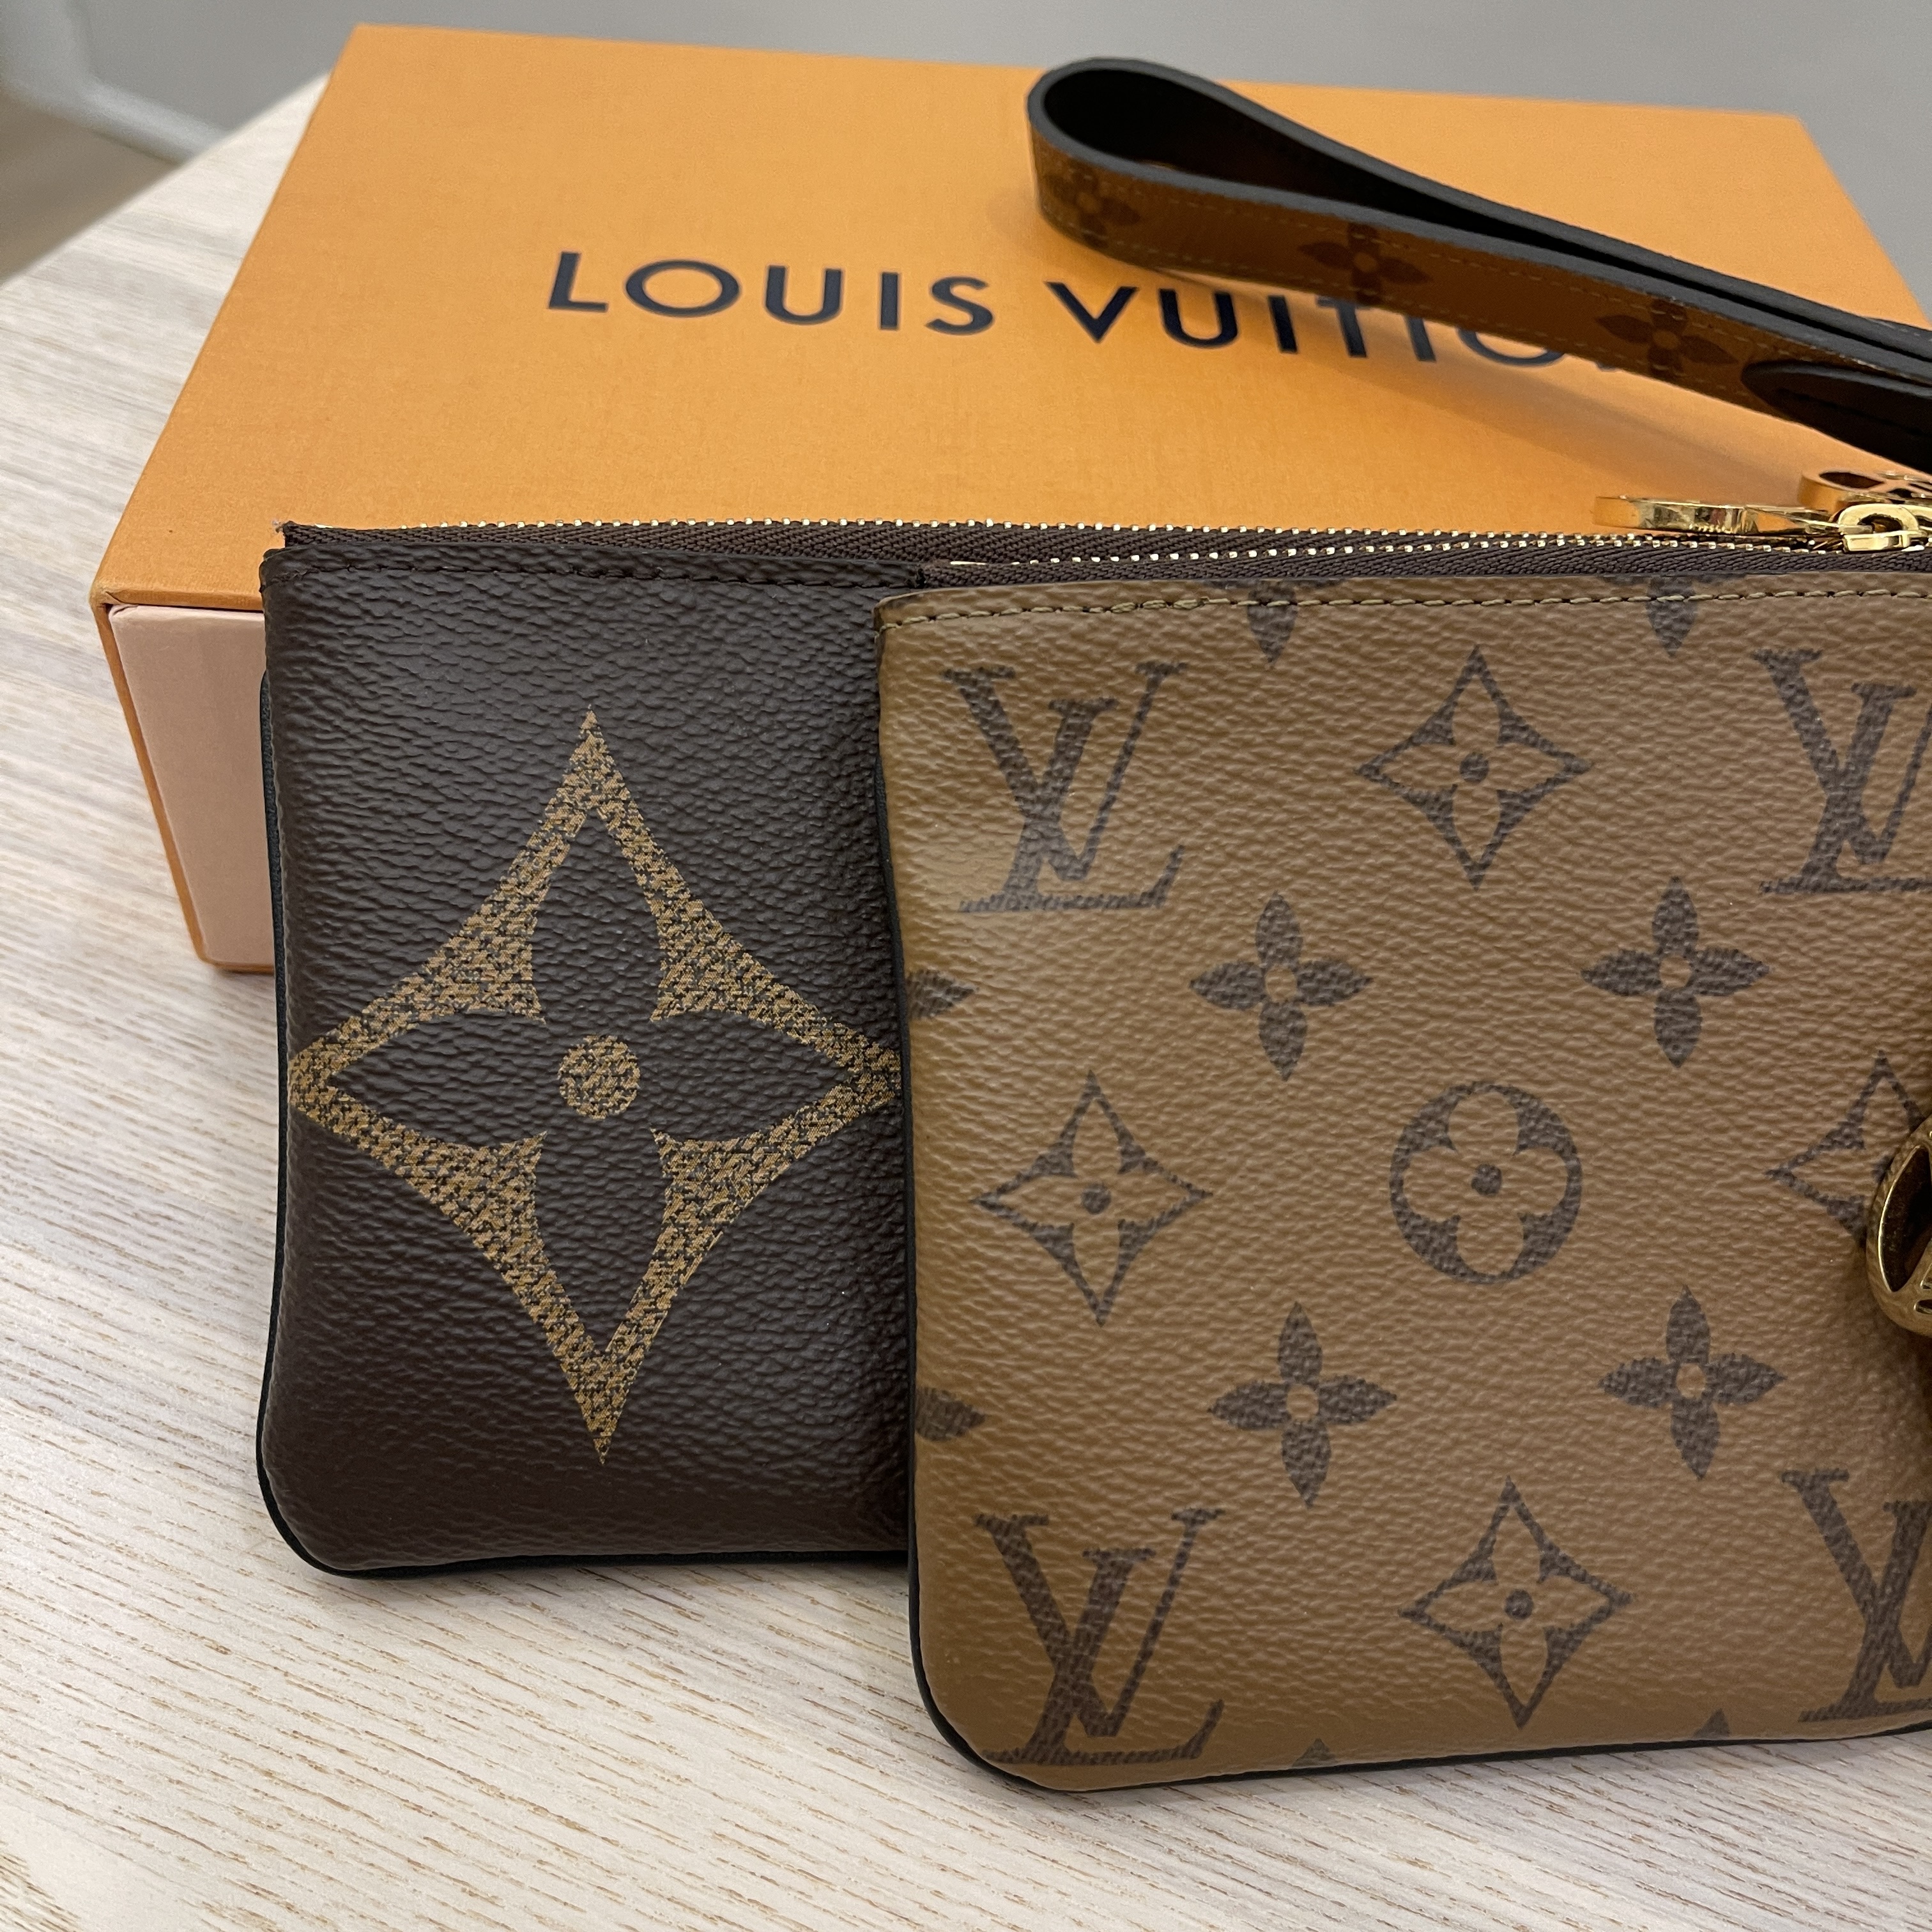 Shop Louis Vuitton 2022 SS Trio Pouch (M59682) by lifeisfun